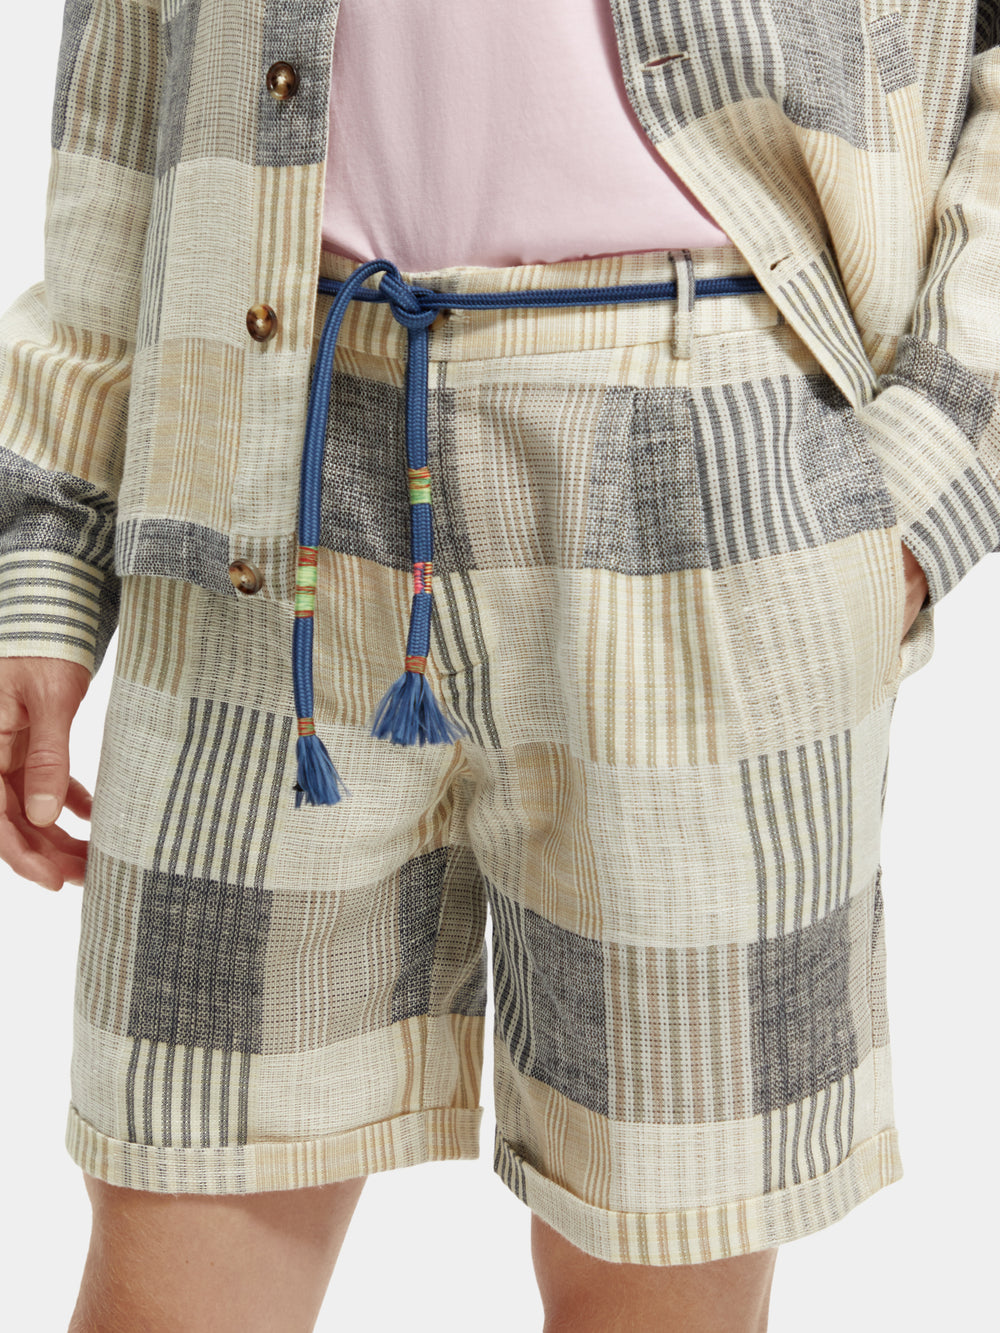 Twilt linen blend jacquard check pleated shorts - Scotch & Soda AU